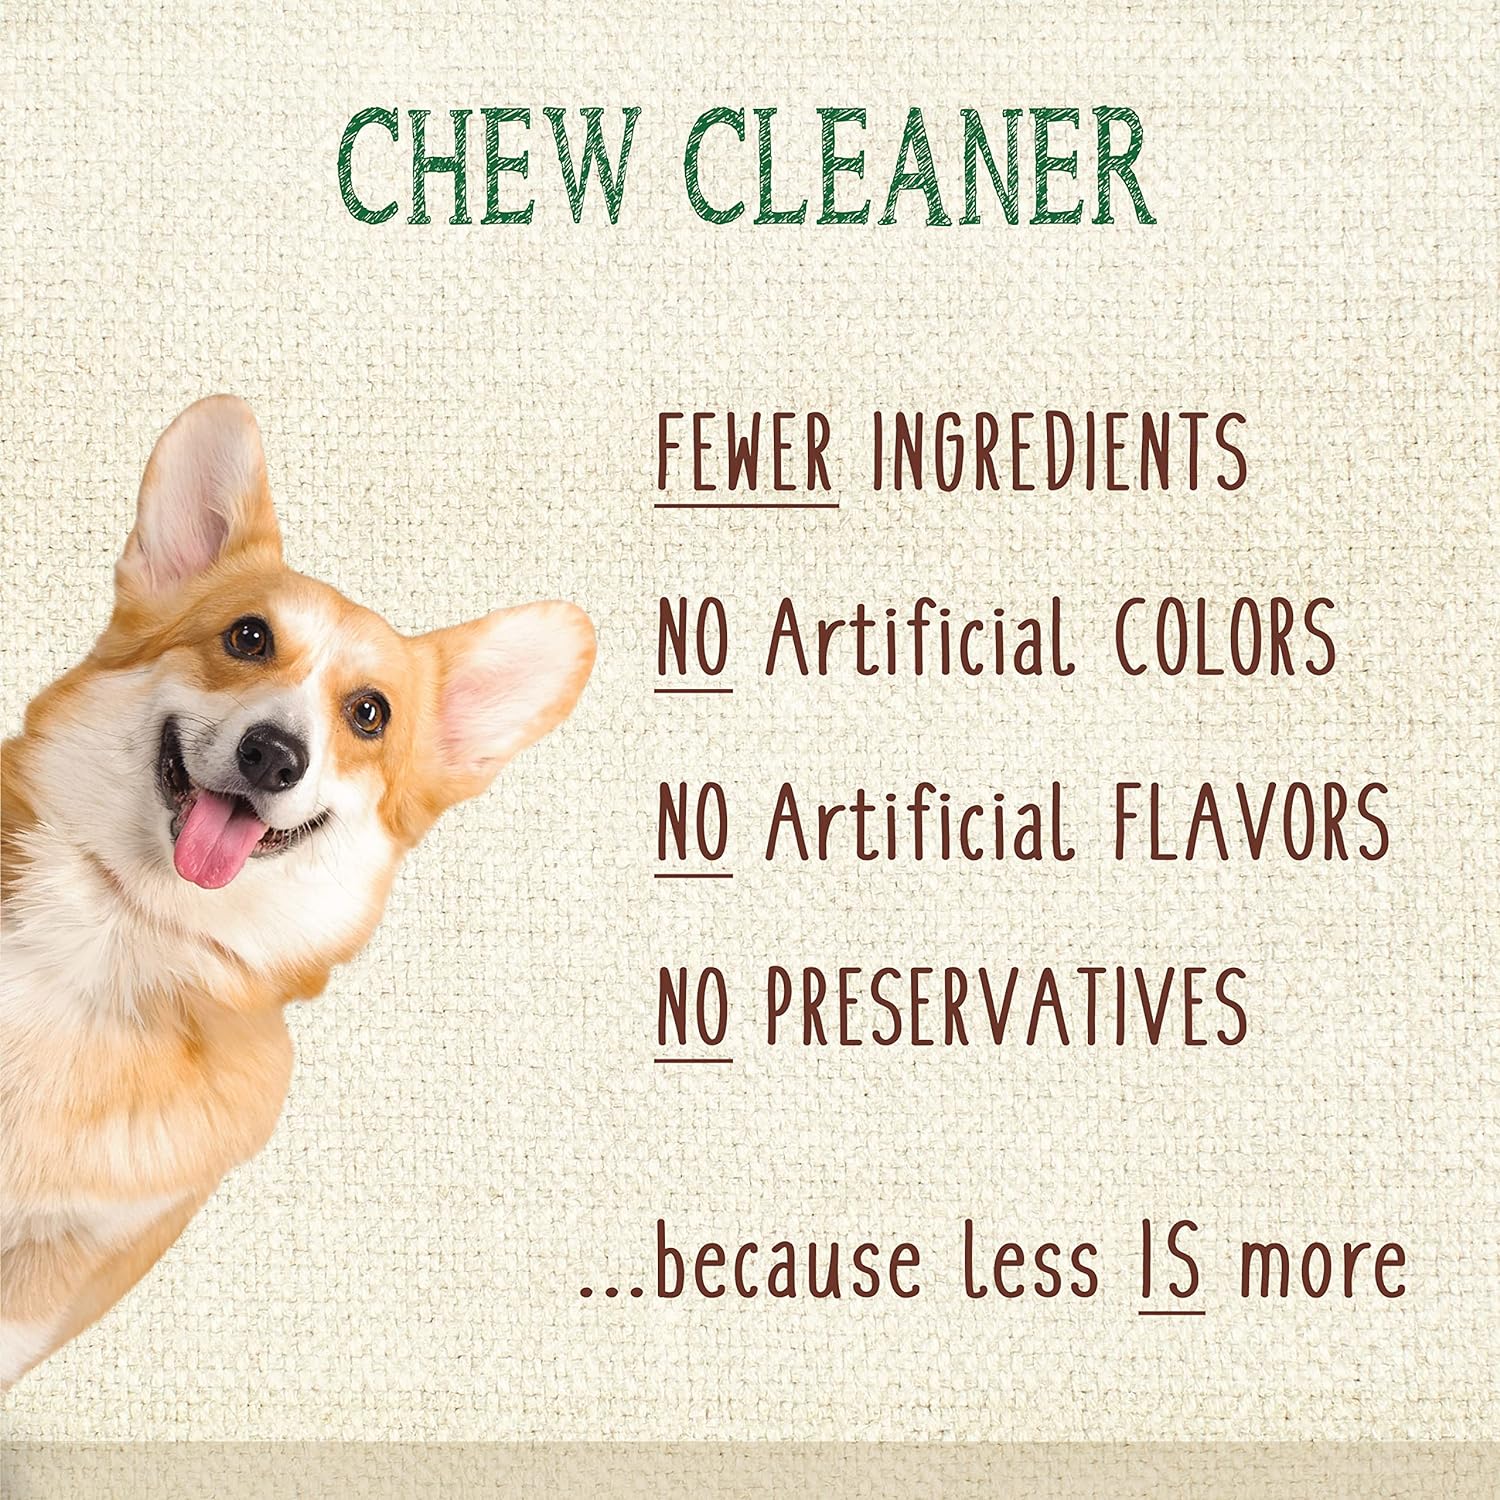 Nylabone Nutri Dent Dog Dental Chews - Natural Dog Teeth Cleaning & Breath Freshener - Dental Treats for Dogs - Filet Mignon Flavor, Small (28 Count)